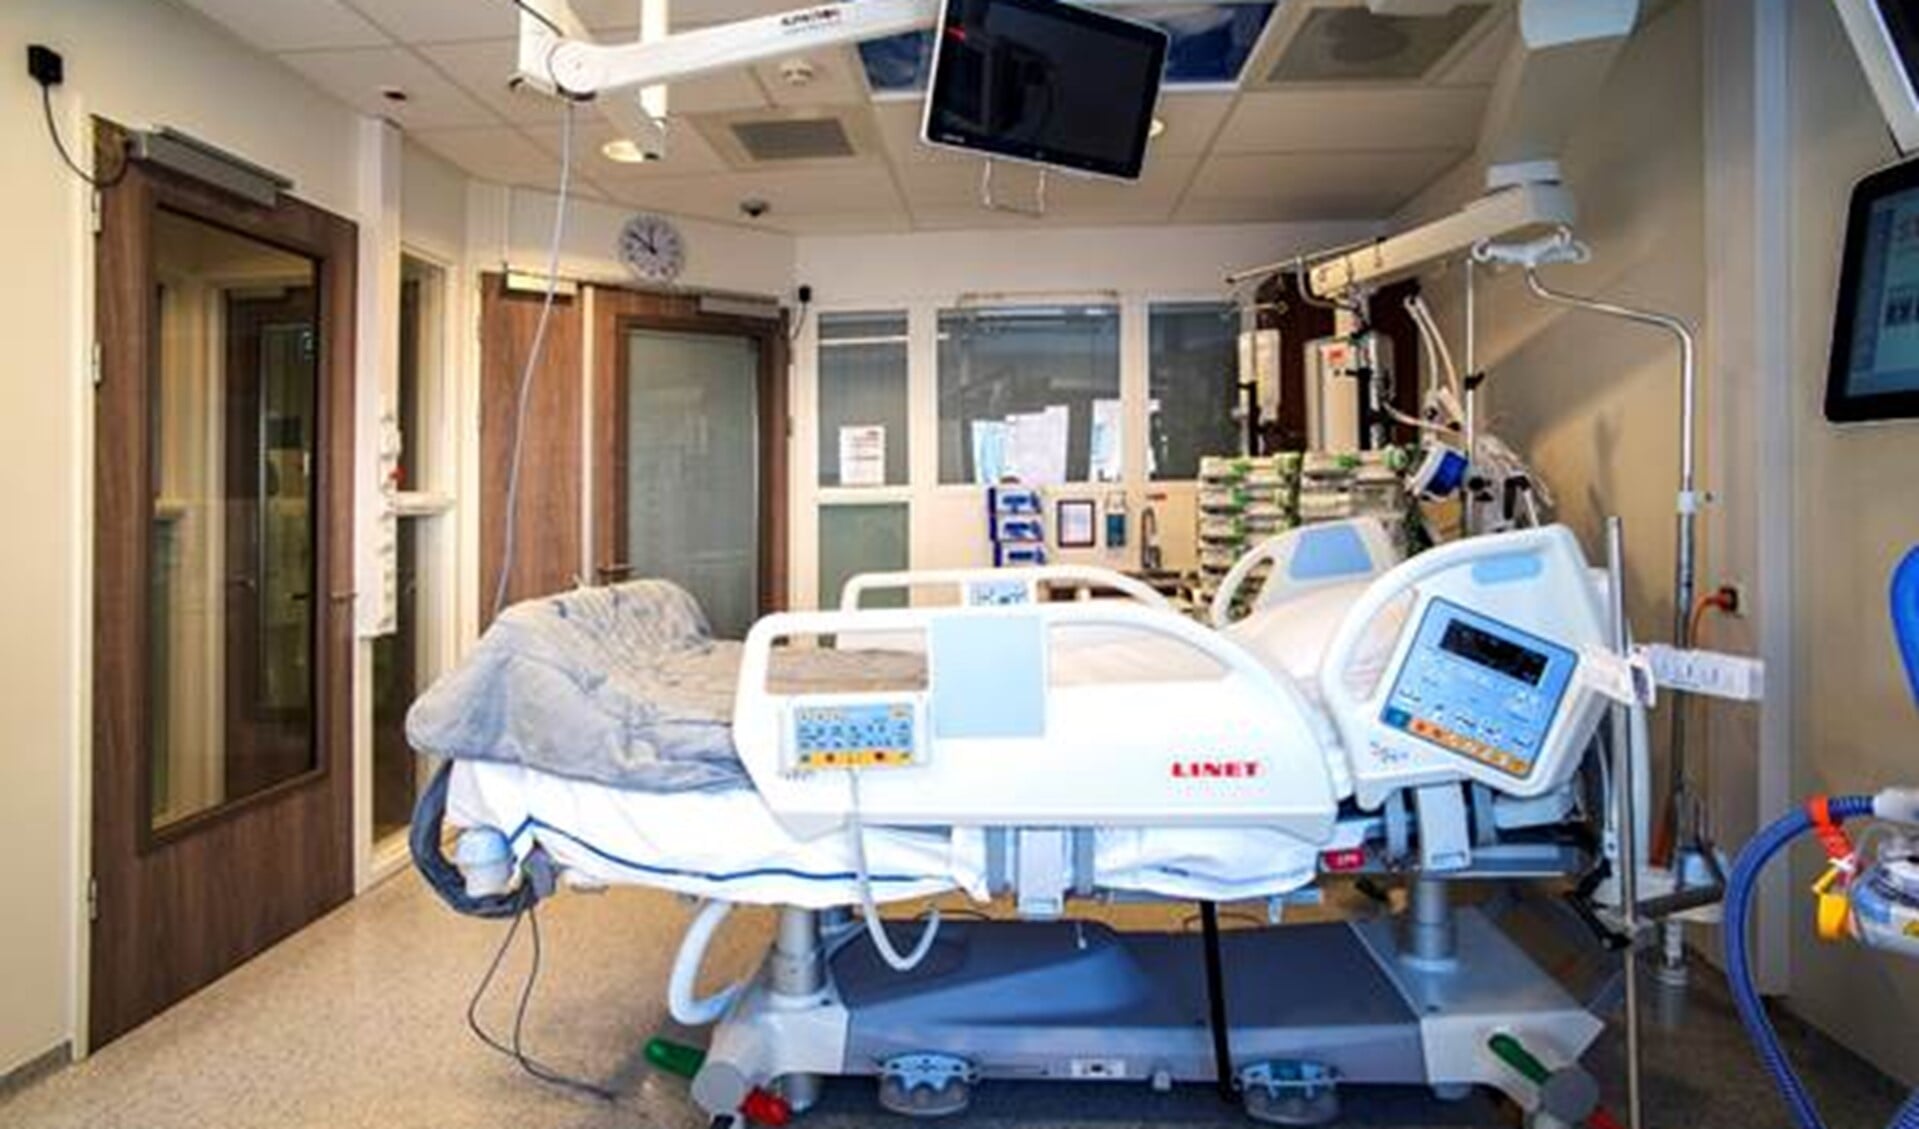 Kamer met beademingsapparatuur op Intensive Care